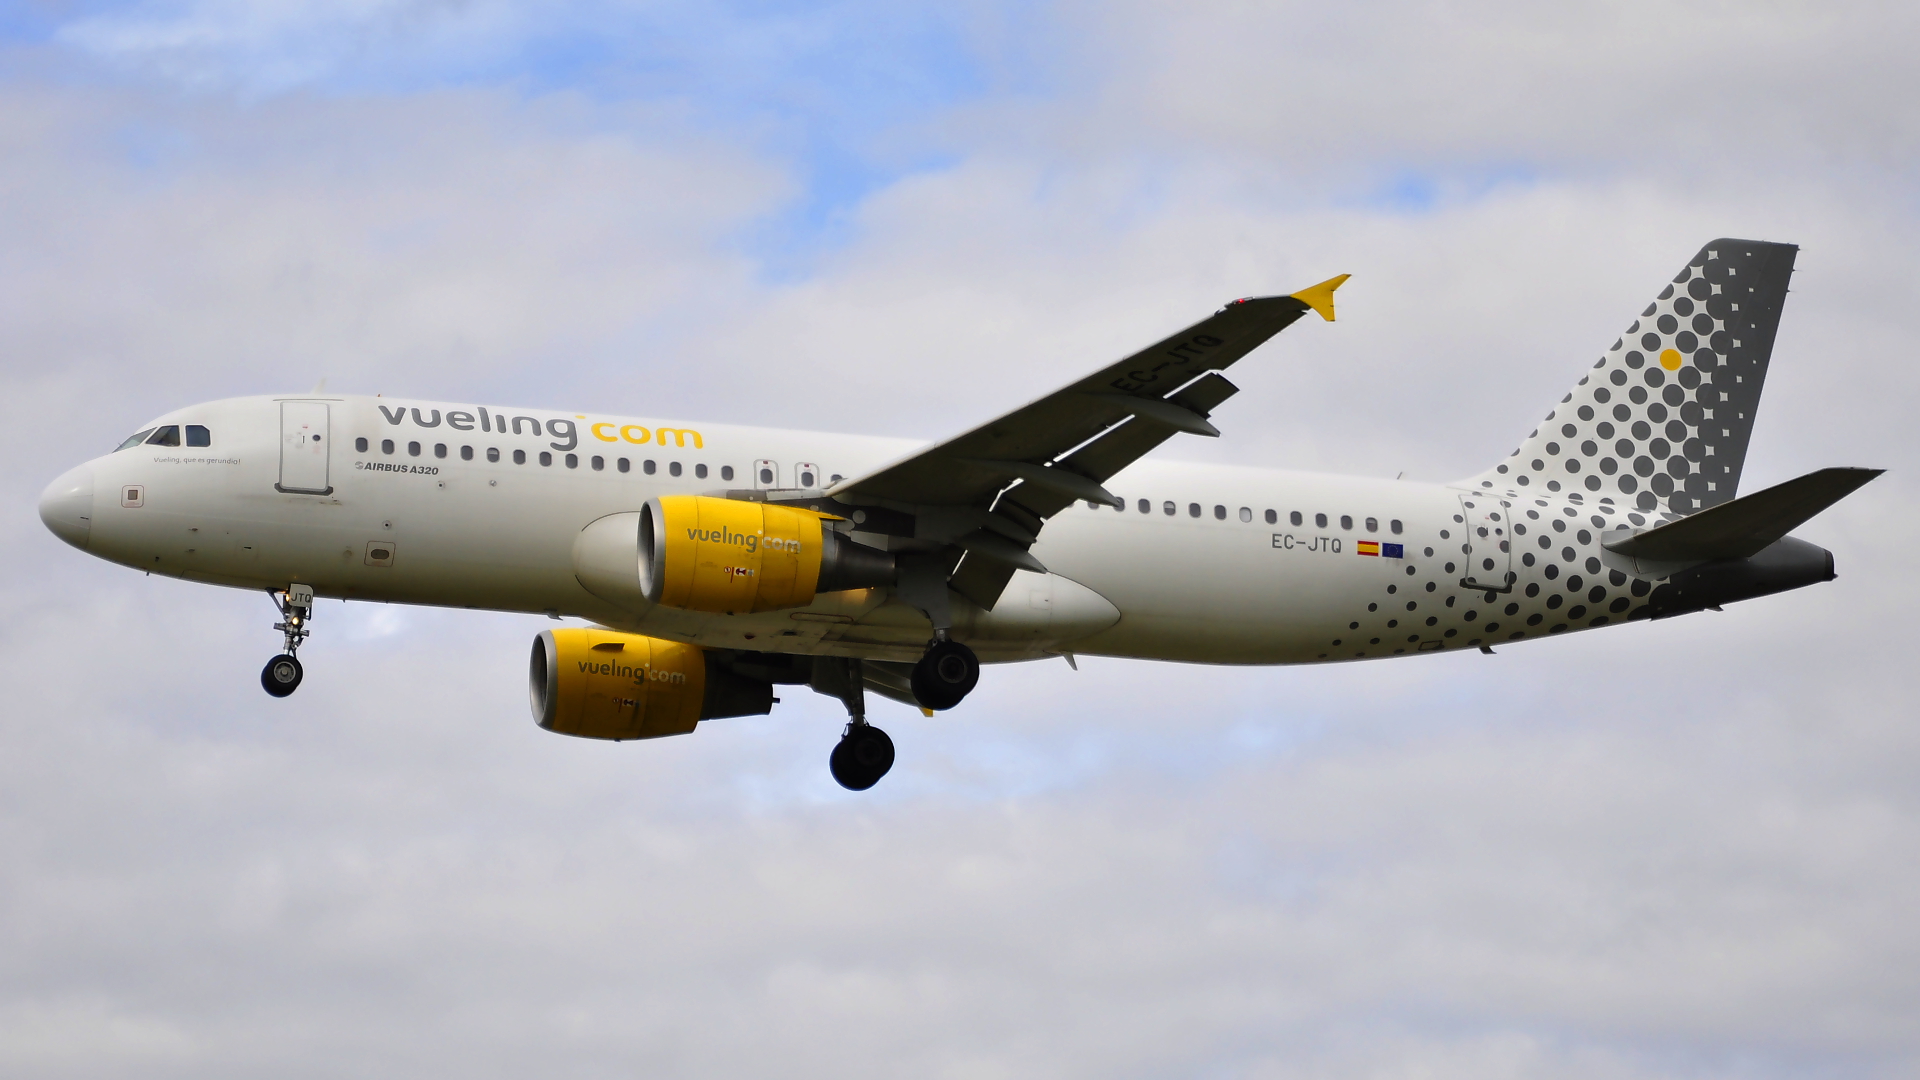 EC-JTQ ✈ Vueling Airlines Airbus 320-214 @ London-Heathrow